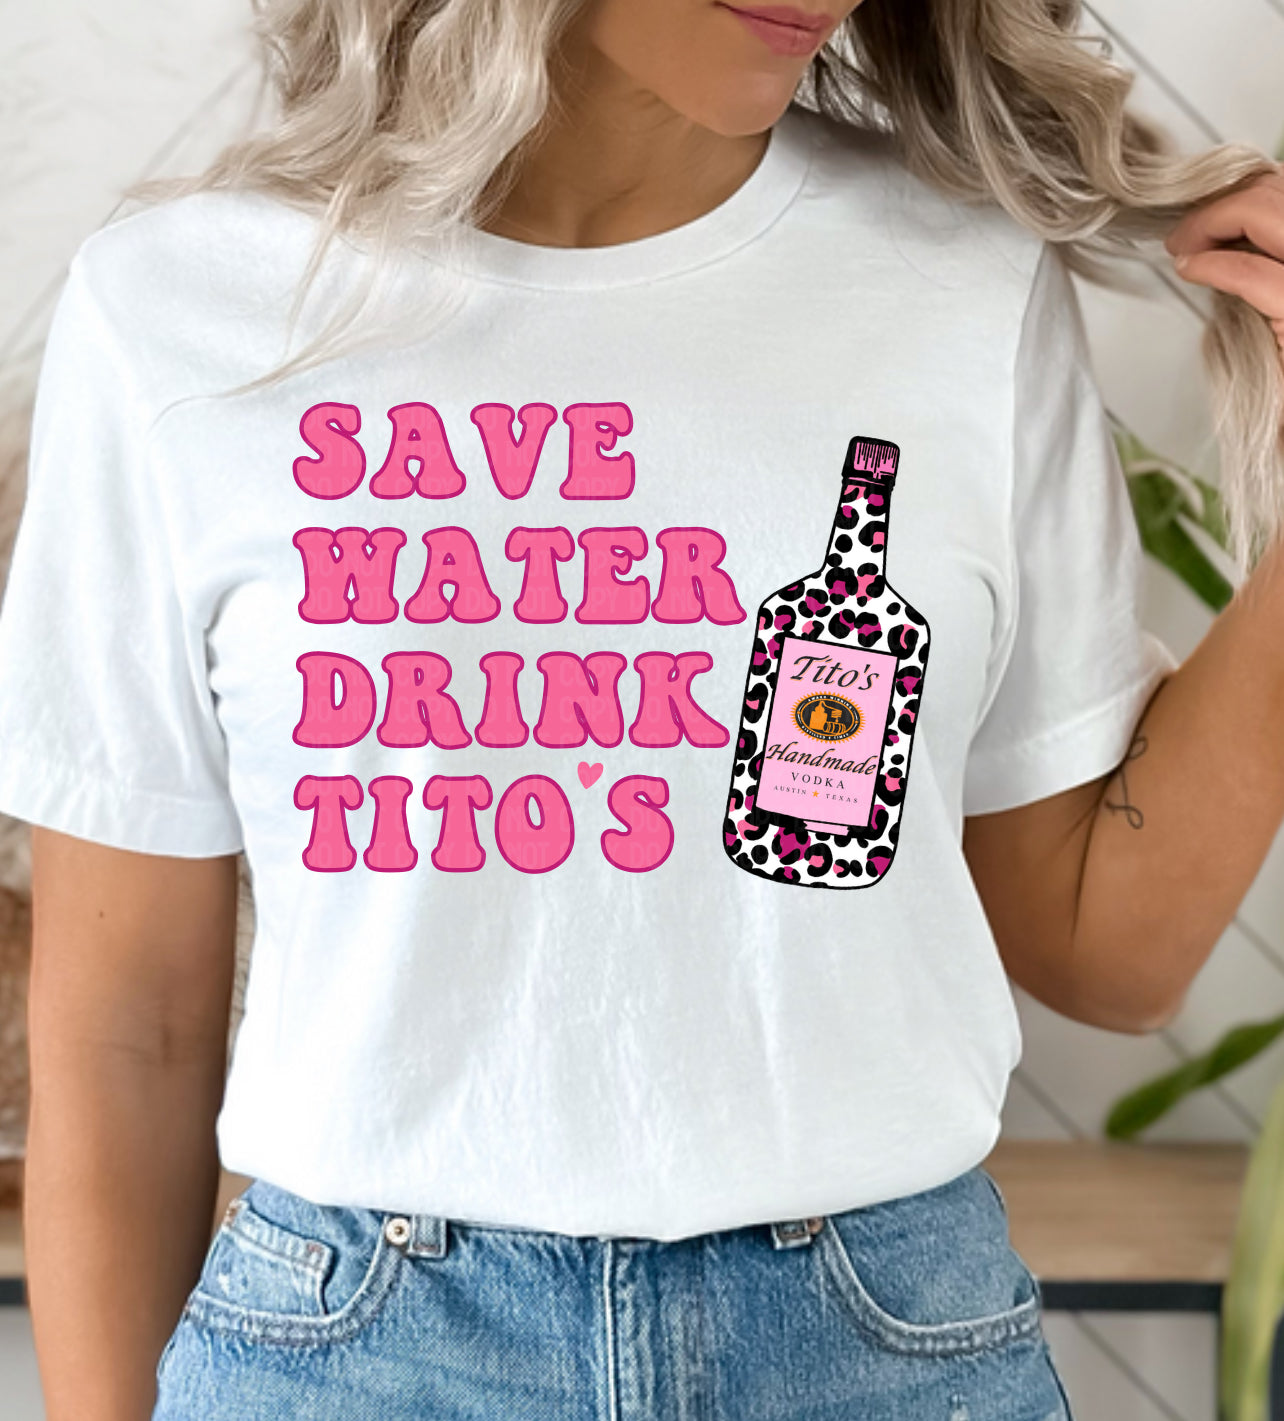 Save water- pink